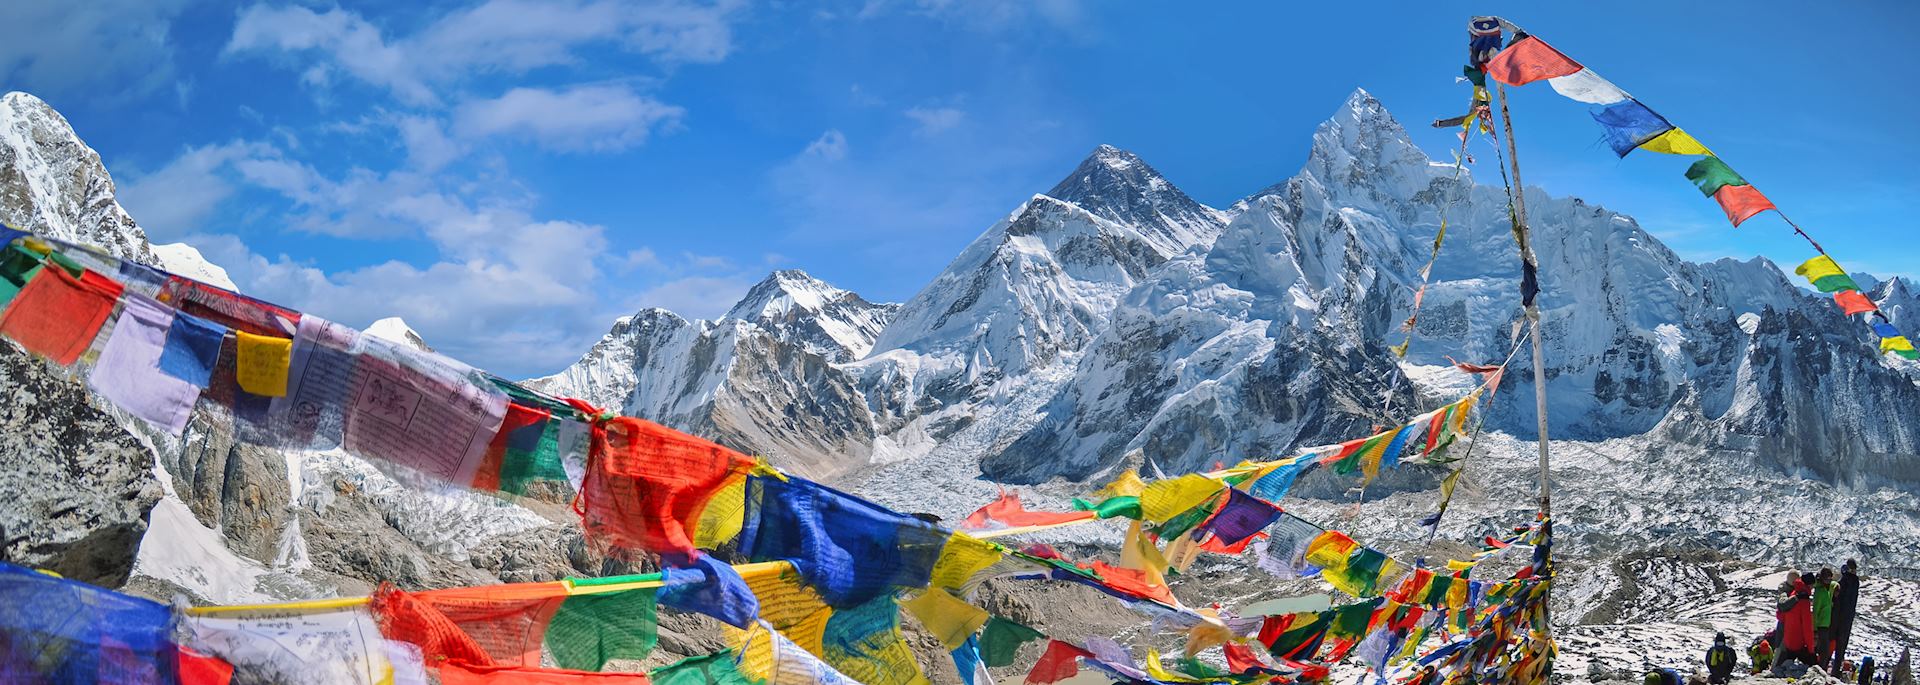 Mt Everest, Nepal